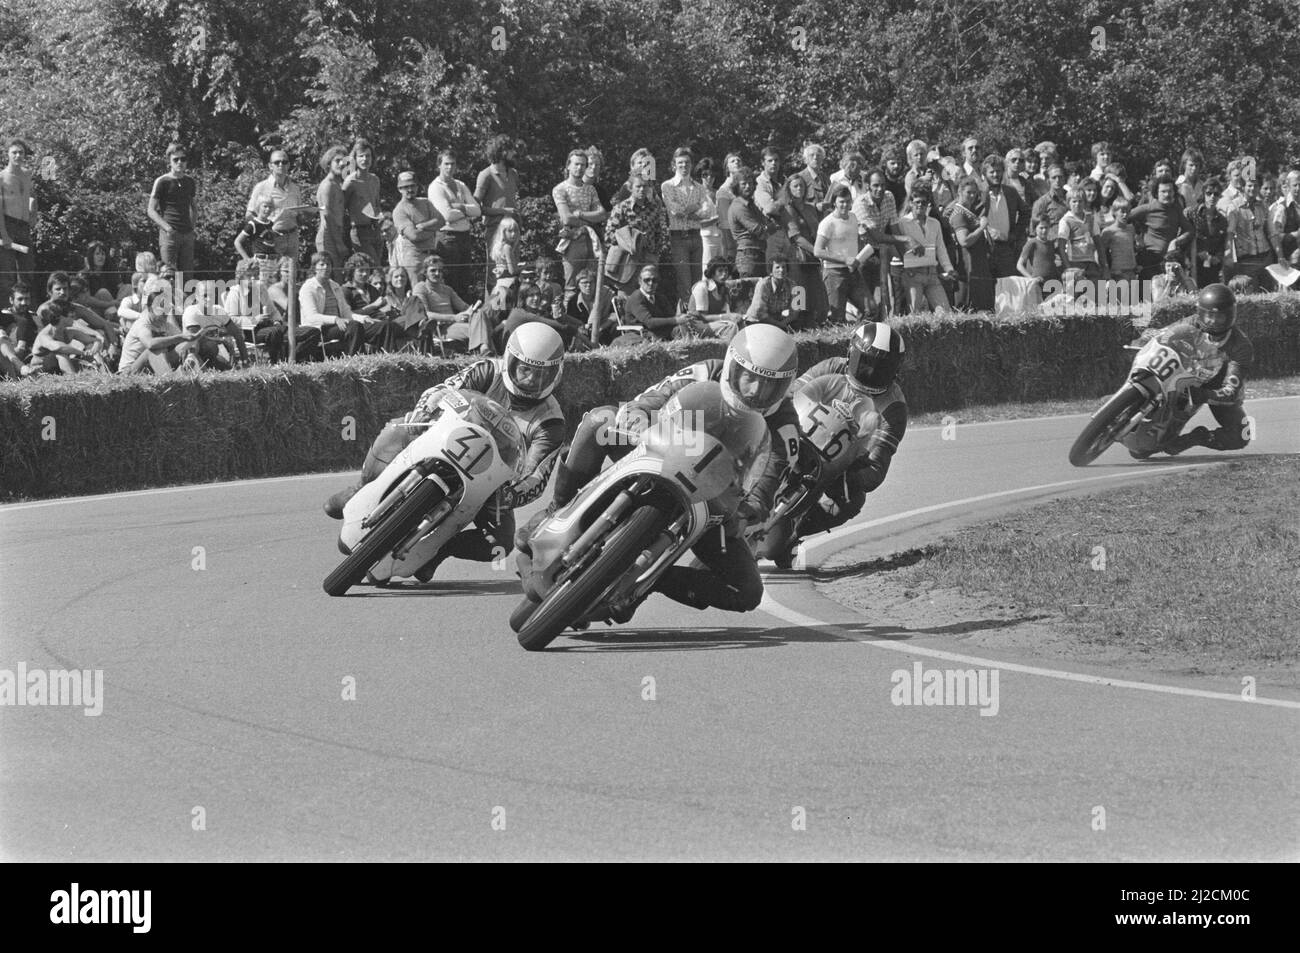 International motorcycle racing circuit Sloten, from left to right: H. van de Pol (no.31), Rob van Zanten (no.1), and R. Zellmor (no.56) ca. 8 August 1976 Stock Photo